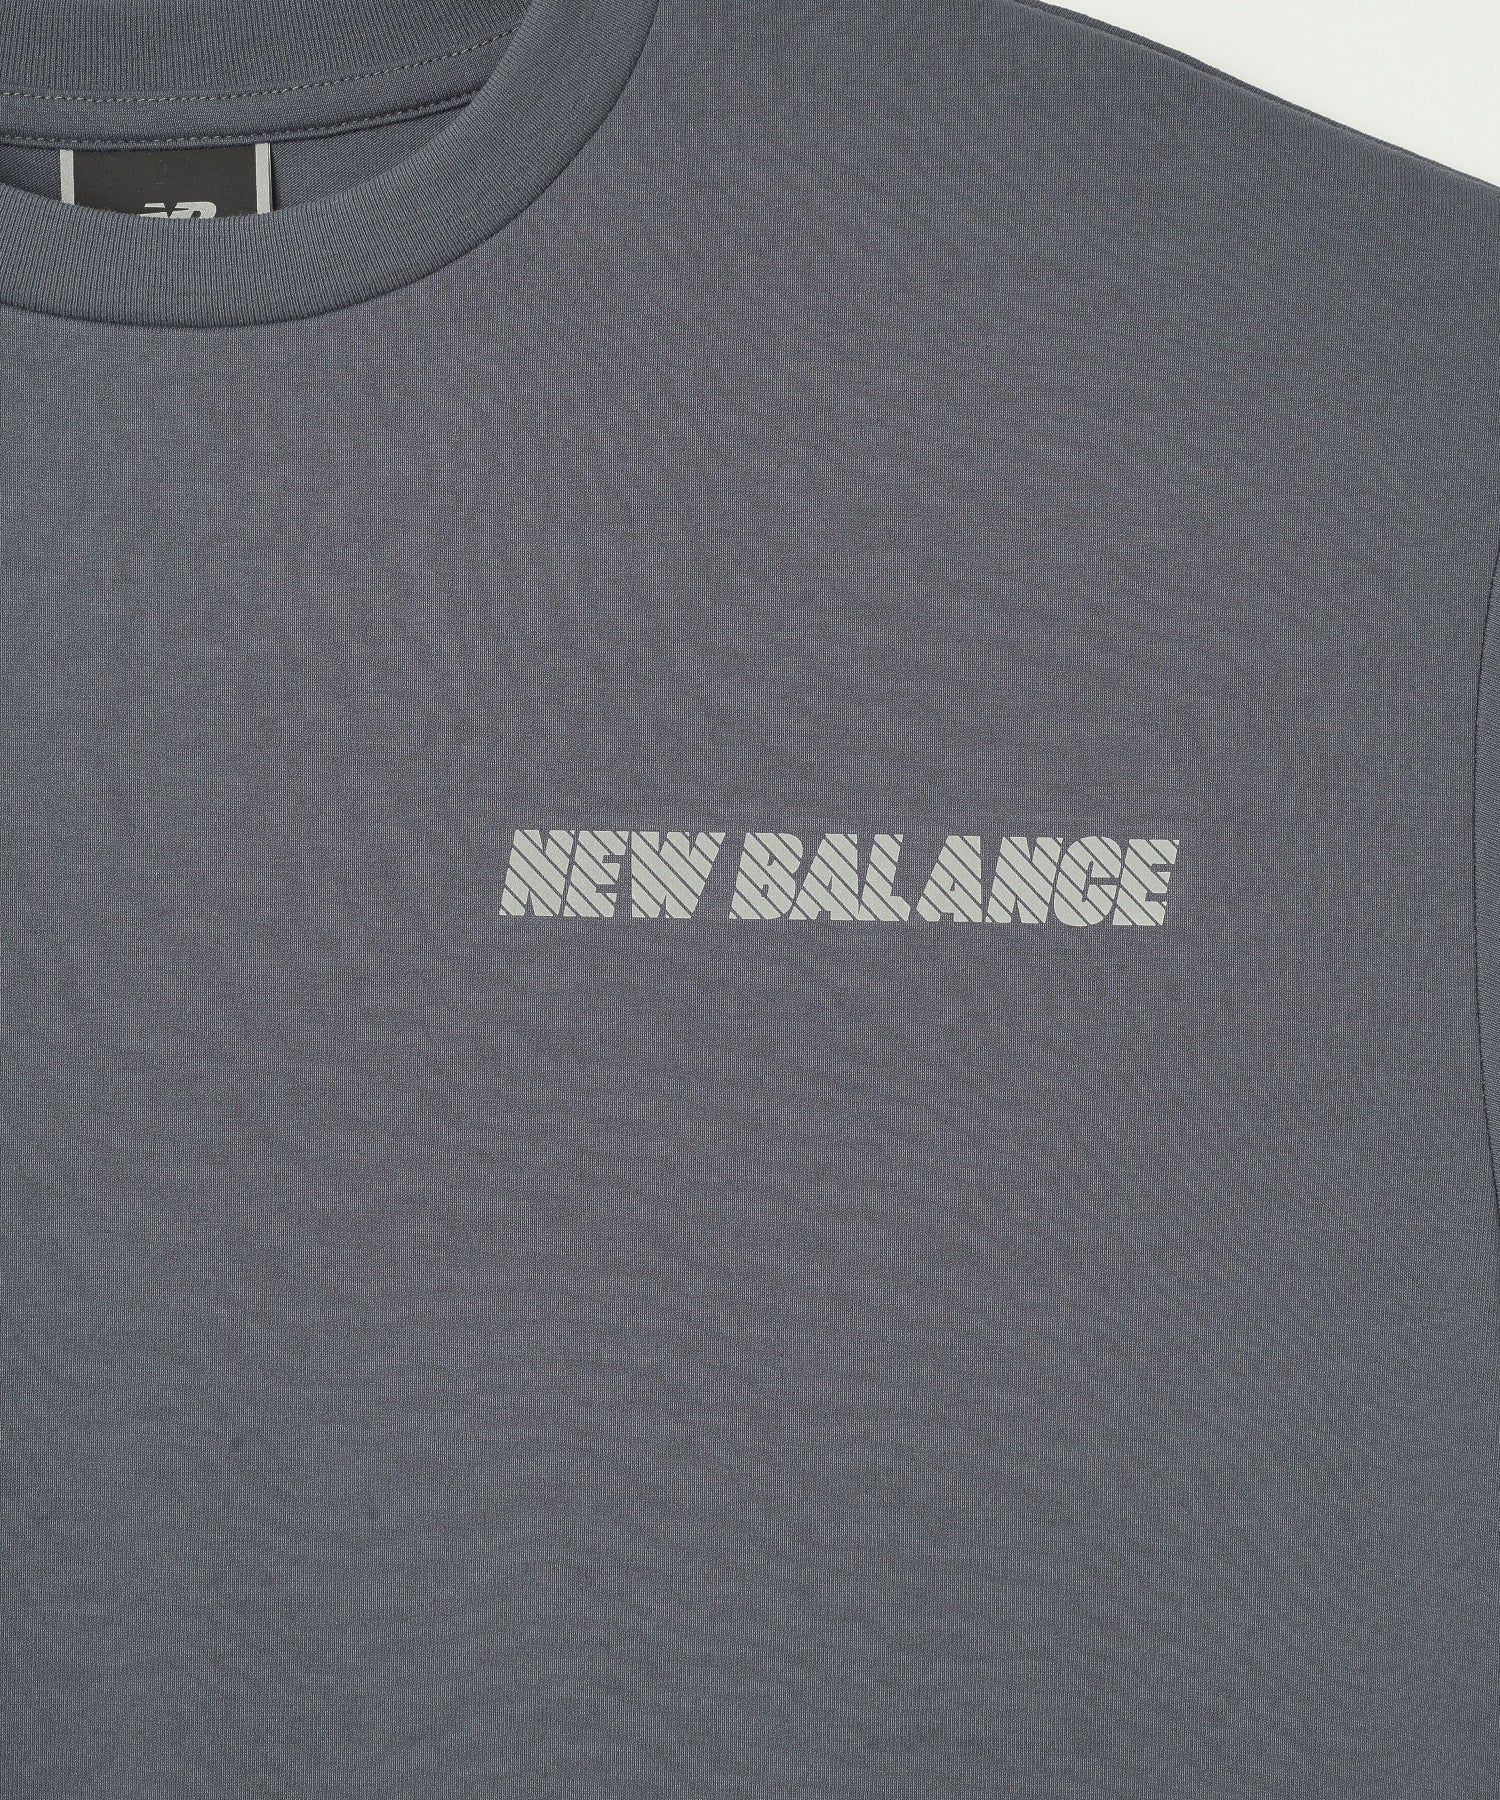 New Balance/ニューバランス/Met24 Reflection NB Logo Tee/AMT45005